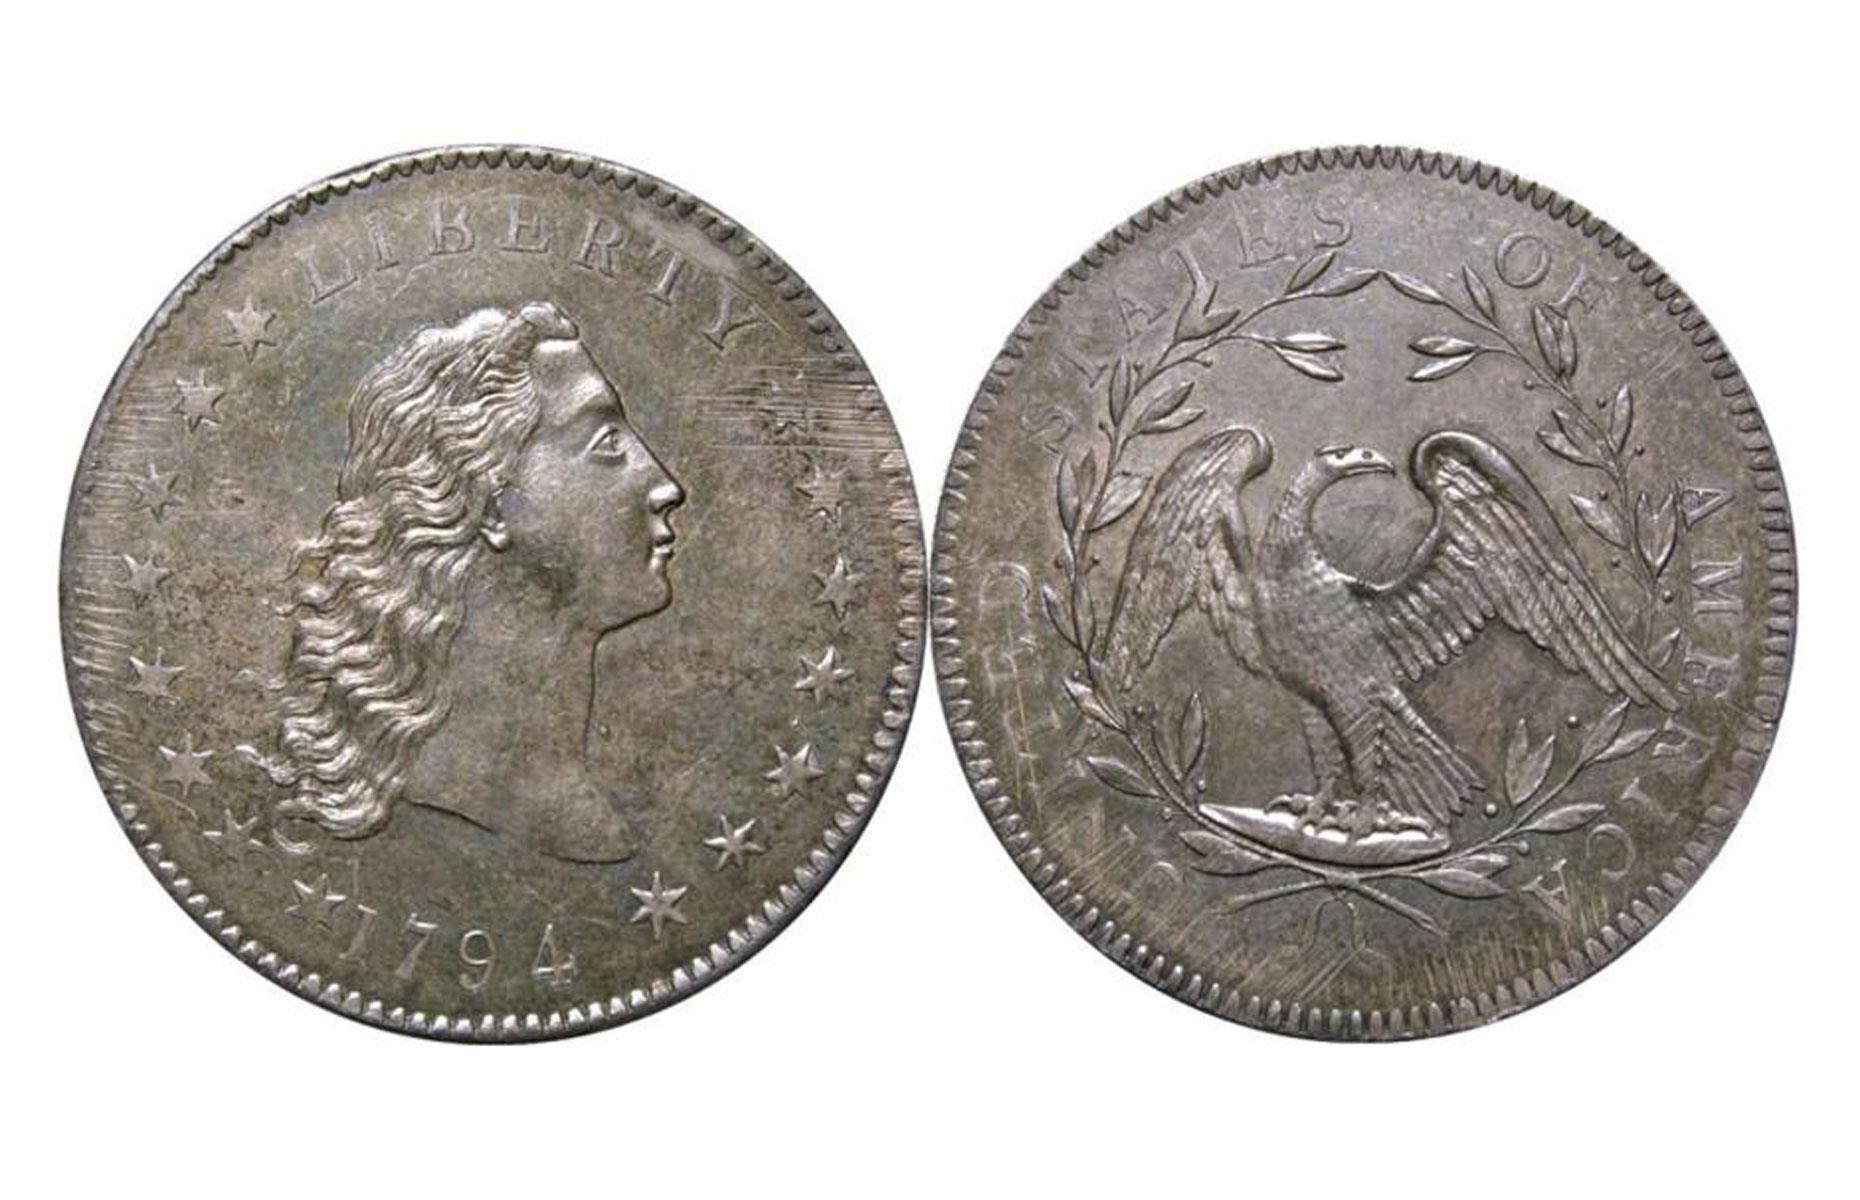 1794 Carter Flowing Hair dollar coin: $10 million